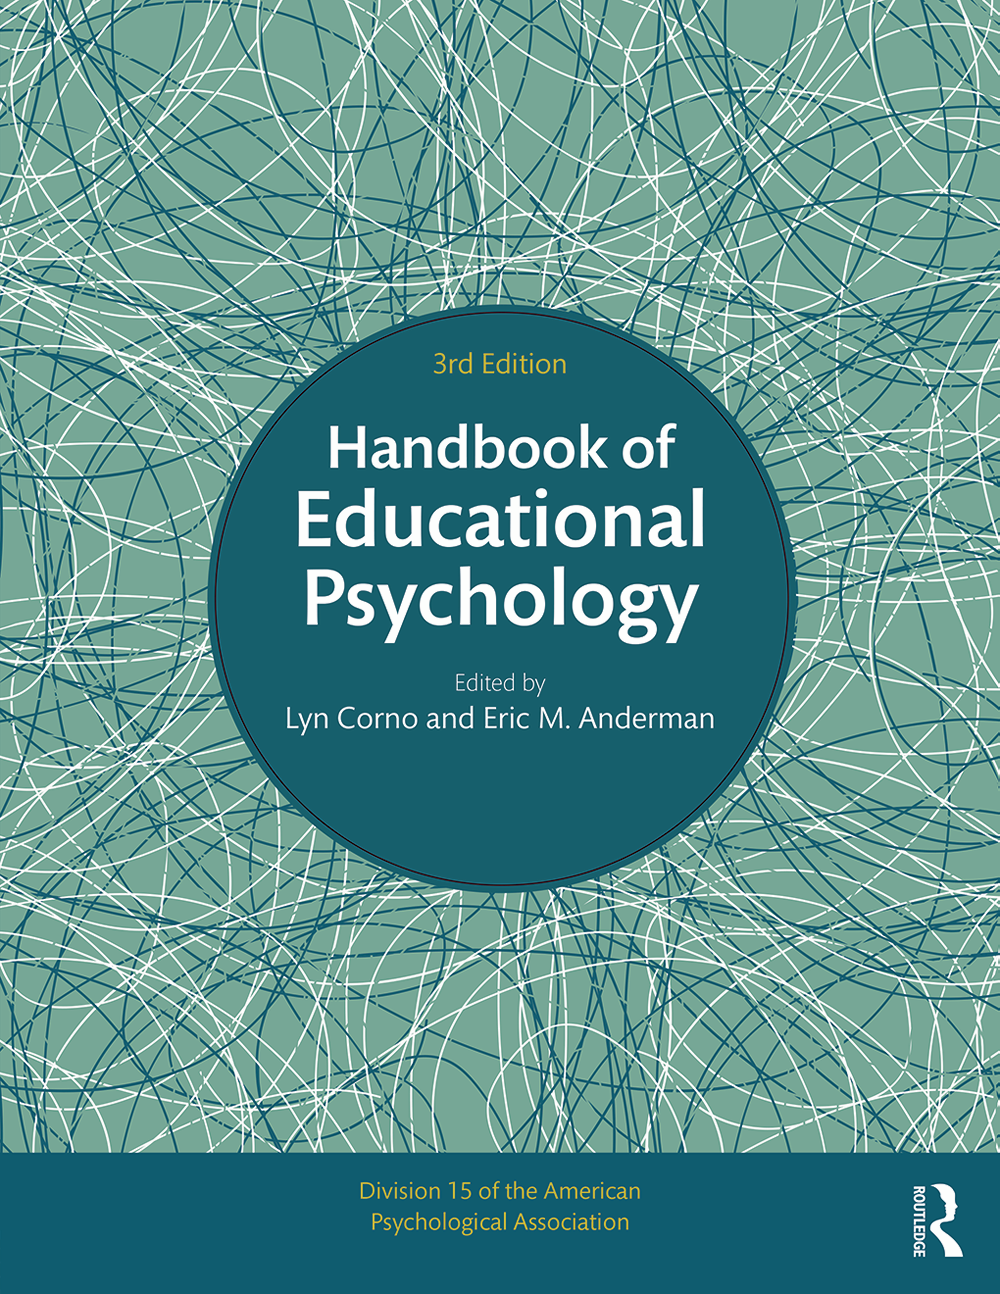 educational psychologists